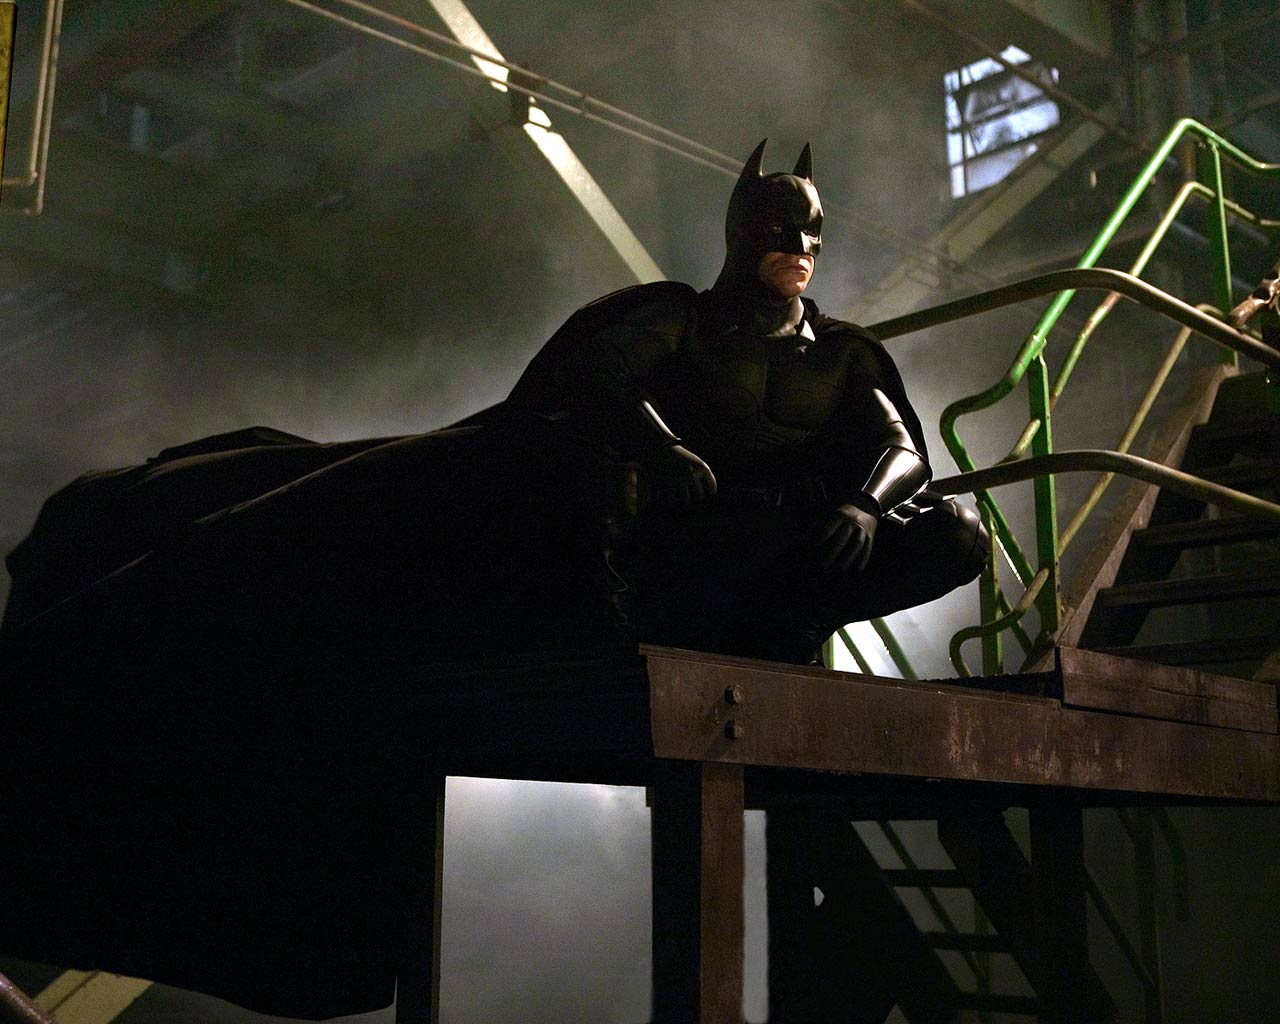 Batman Begins wallpaper - Wallpapers - Movie extras - Movies